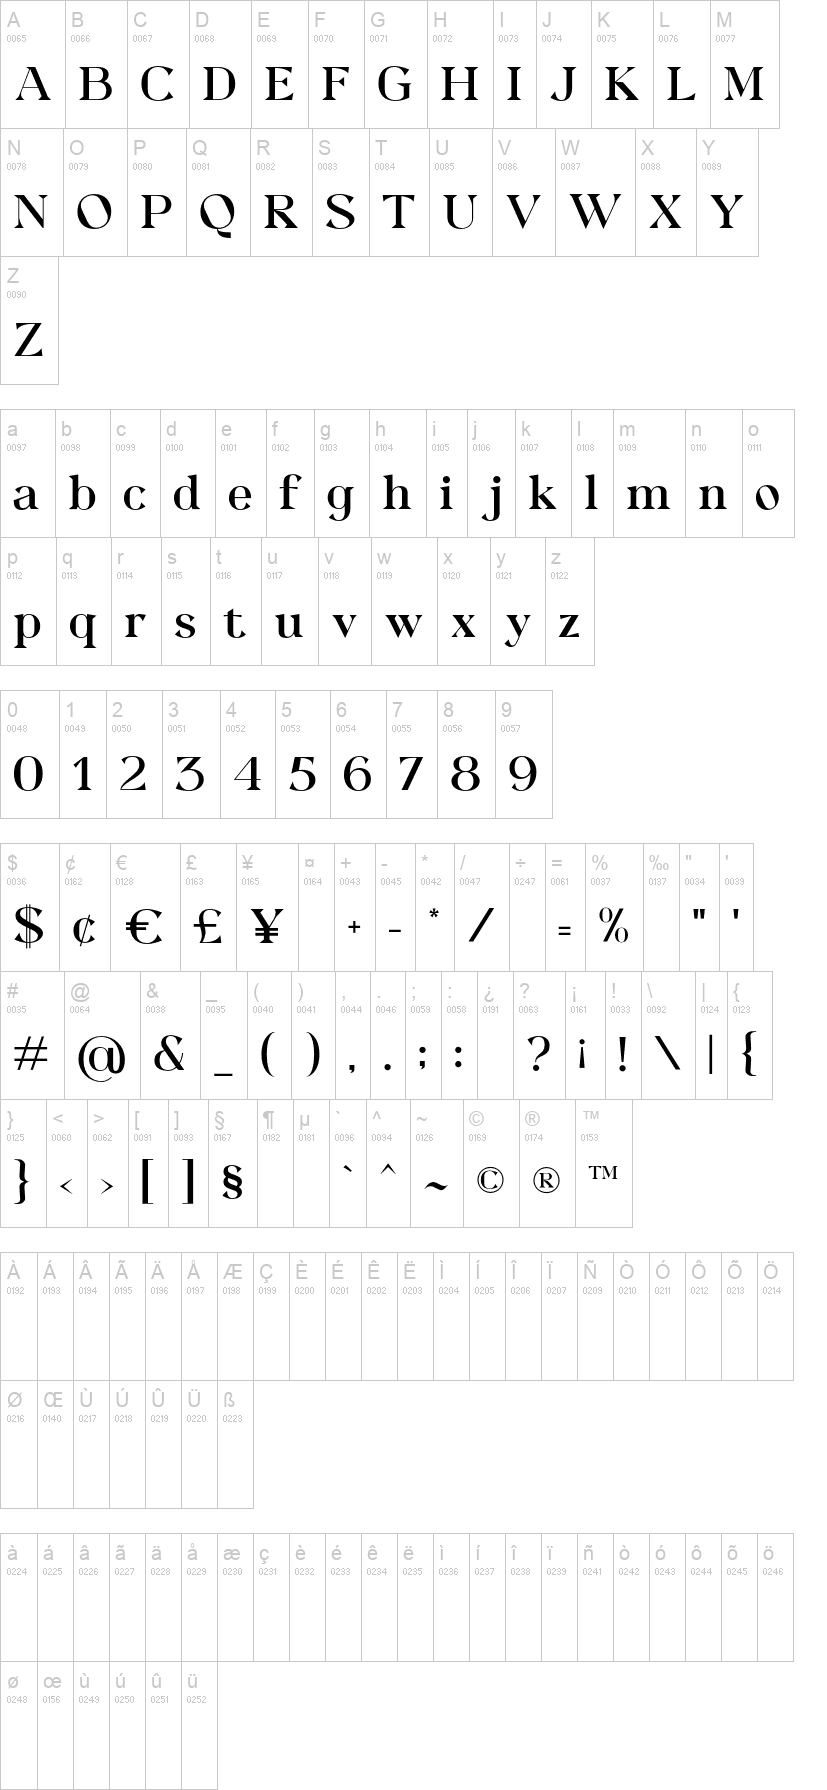 Quetry Serif